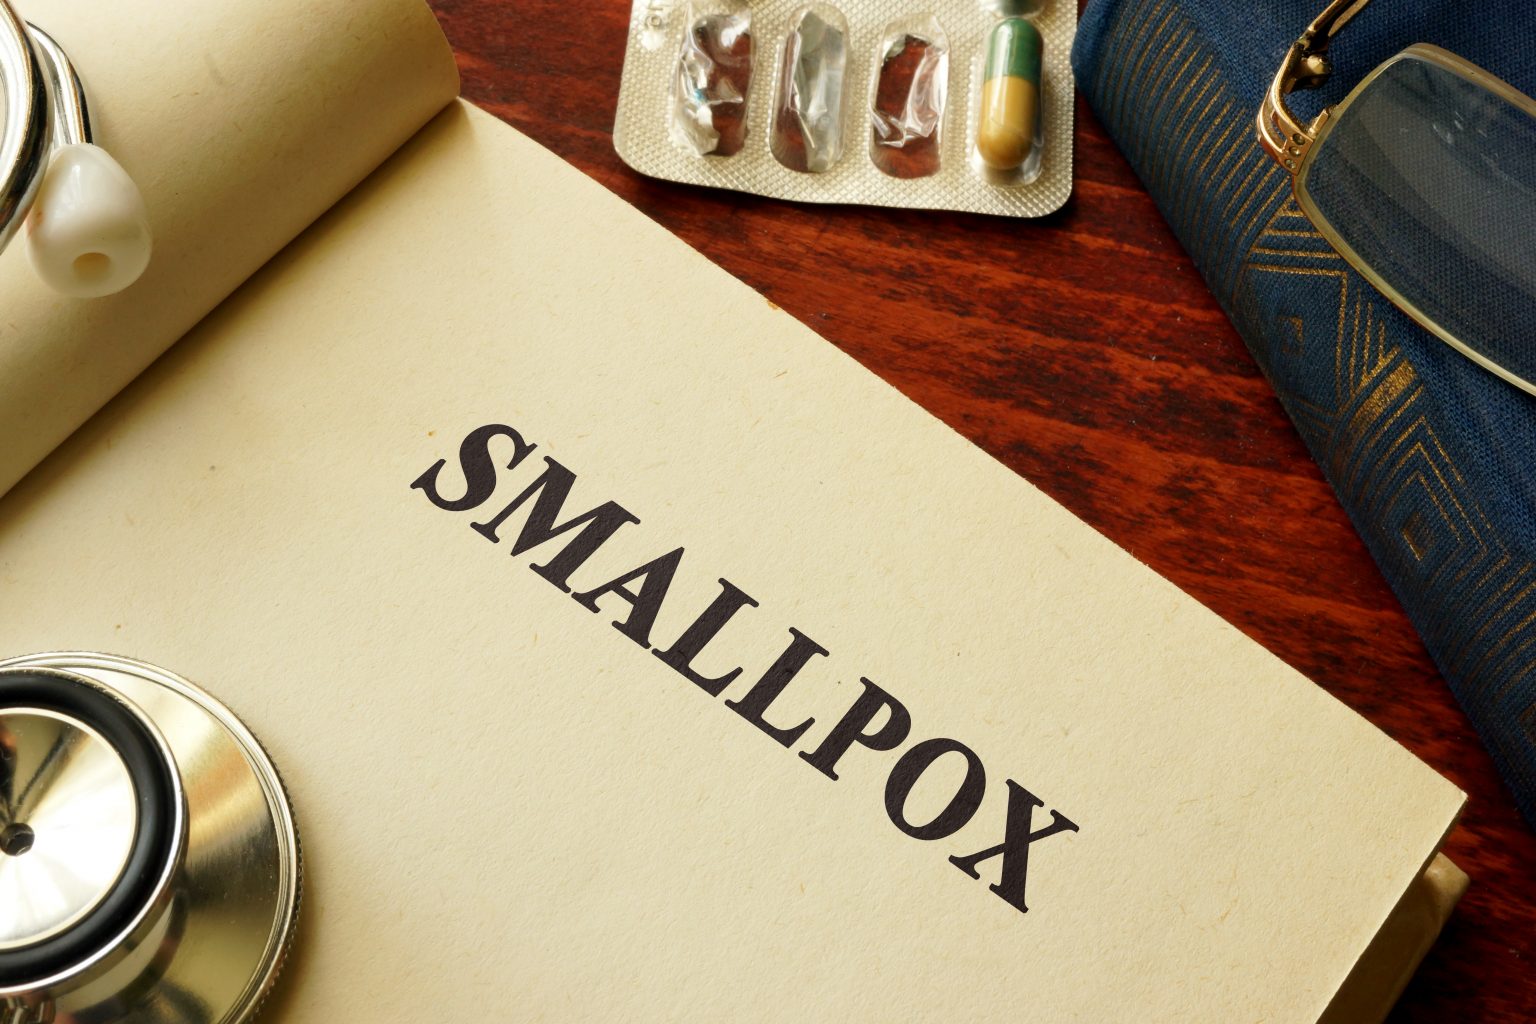 15 Vials of Smallpox (variola) were Reportedly Found at Merck’s North Wales, PA Lab